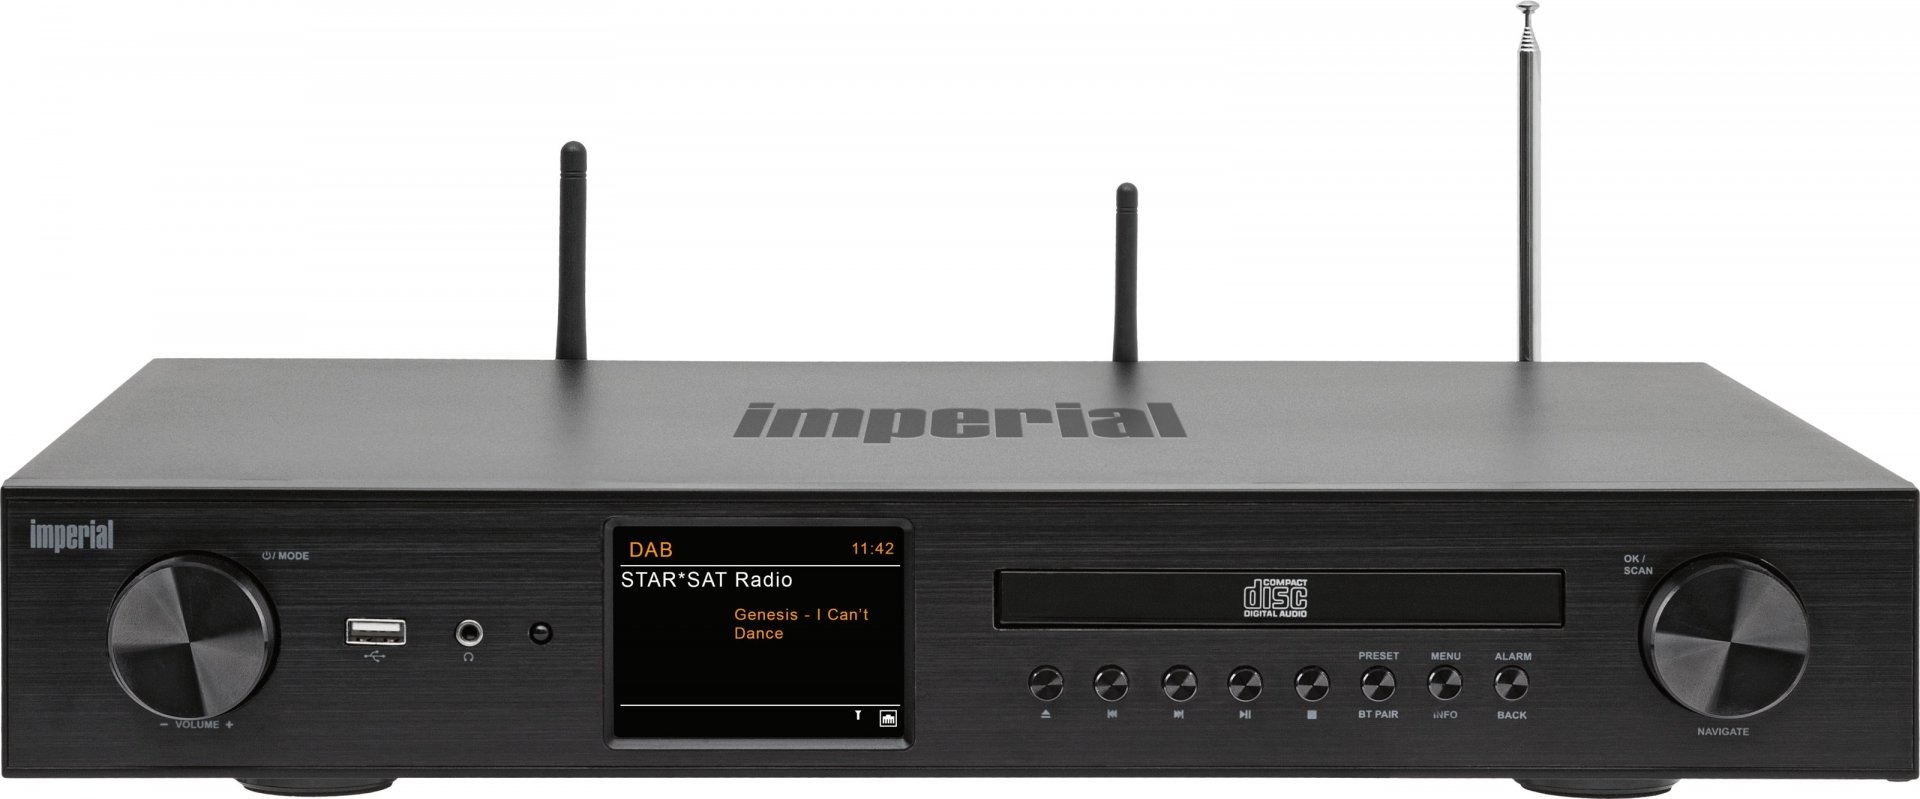 Imperial Dabman I550cd Dab+ En Internetradio Met Cd En Bluetooth Receiver online kopen